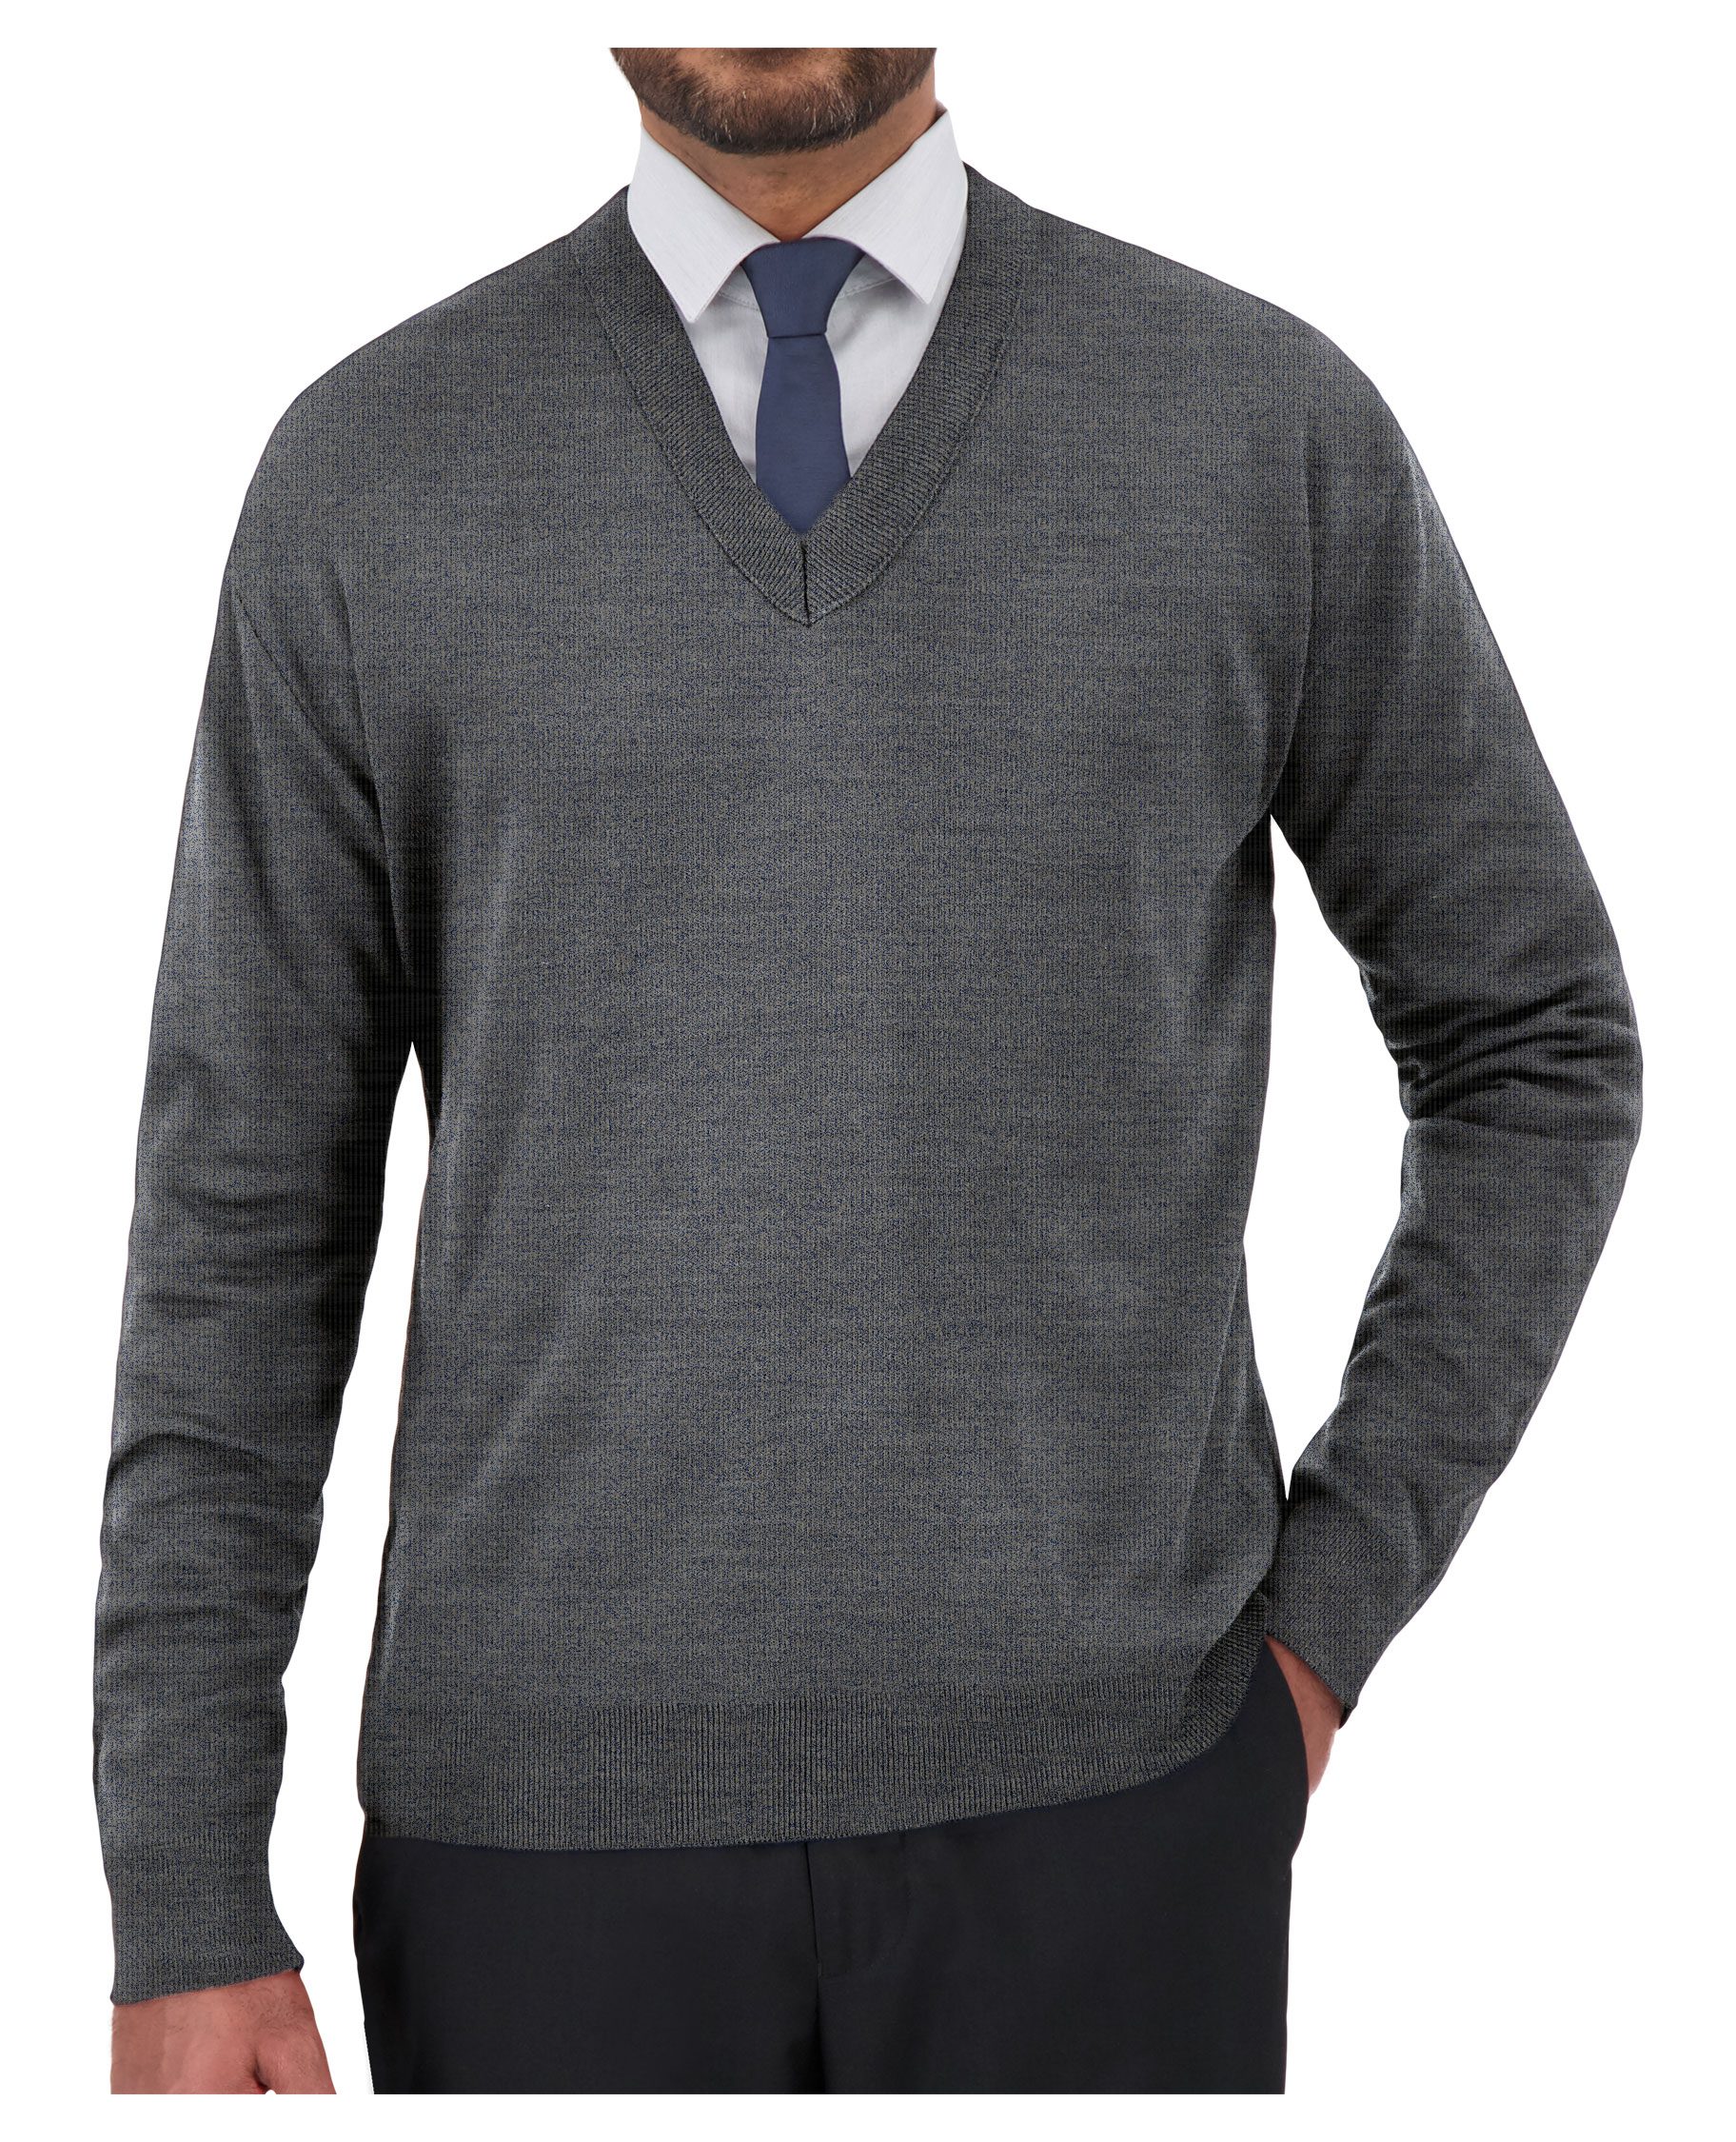 Cobmex "Cashmere"-Like V-Neck Long Sleeve Pullover #2009 Executive Grey